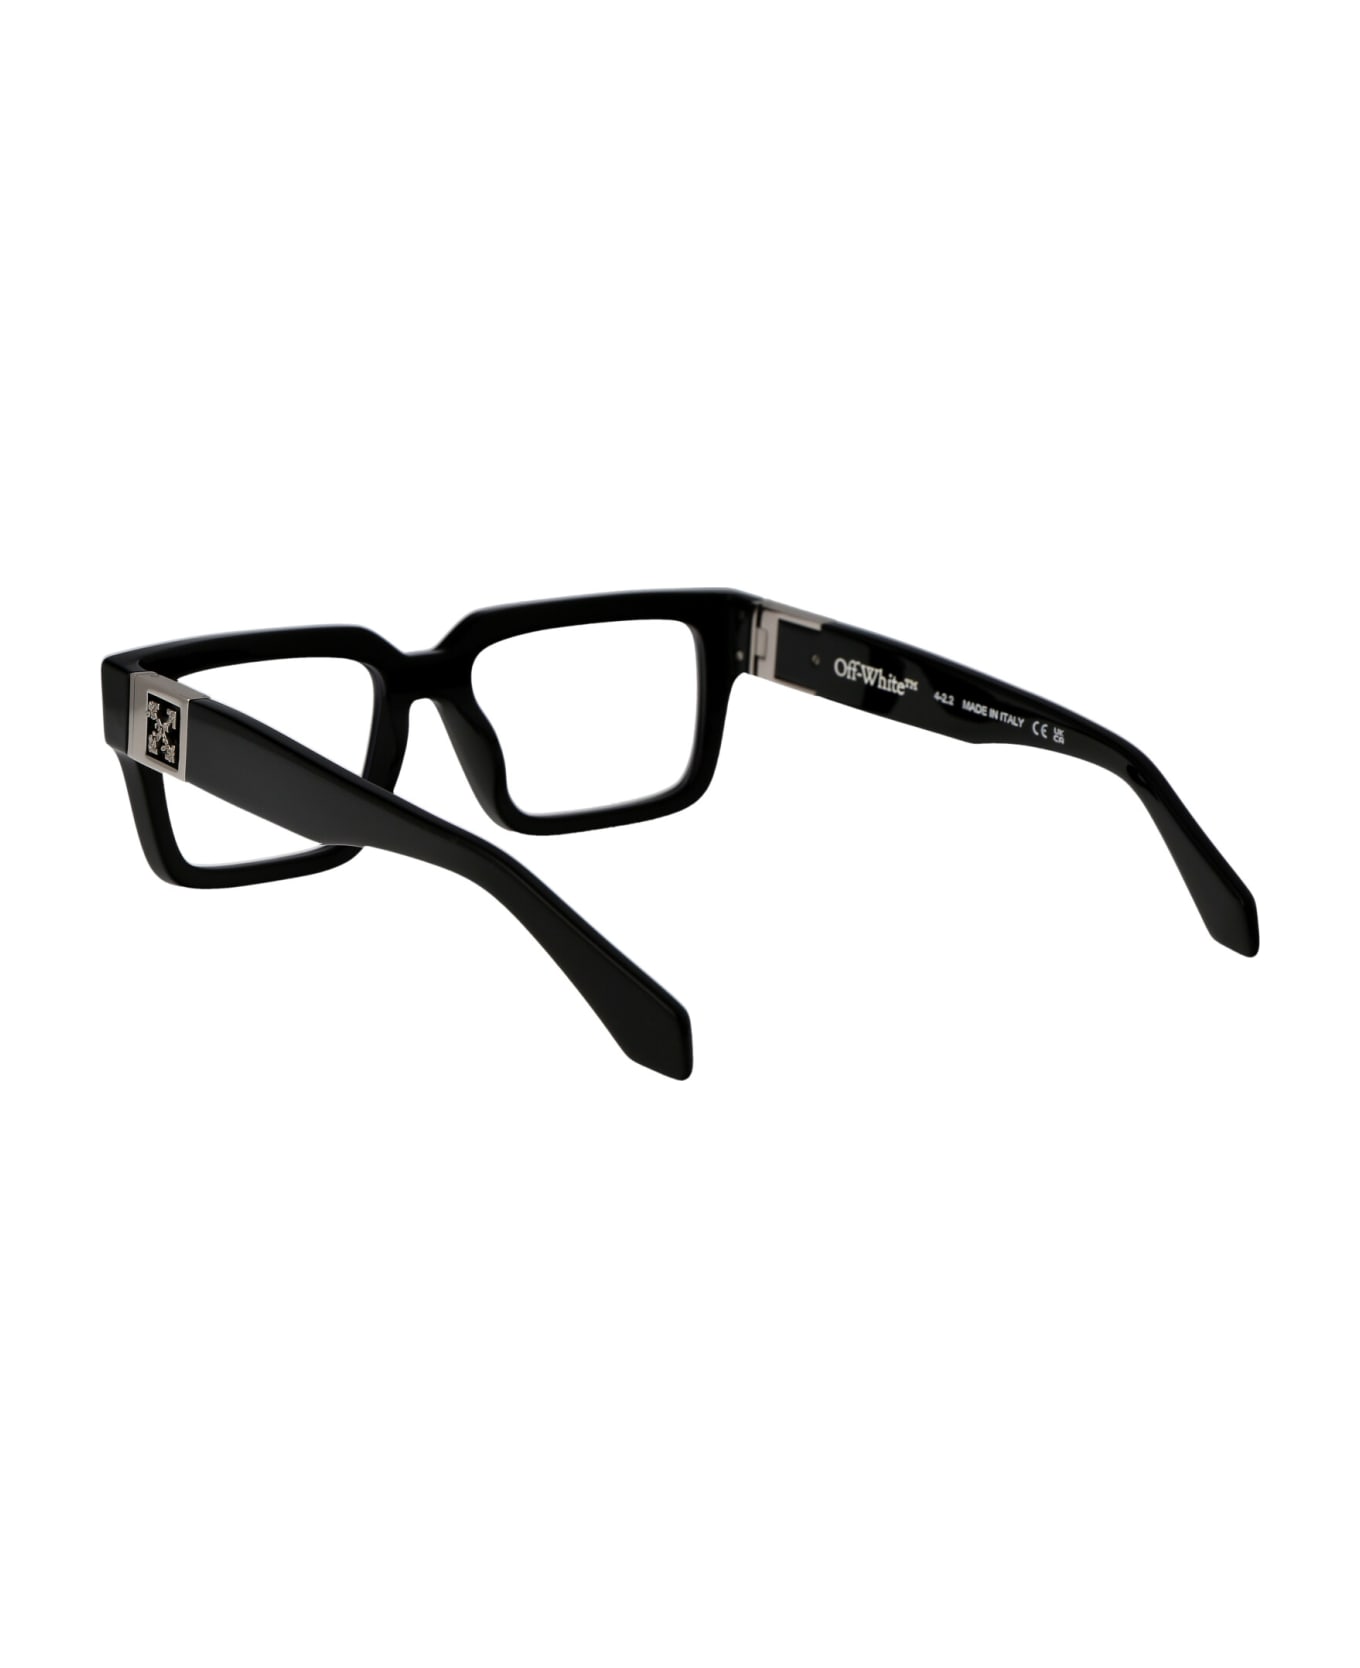 Off-White Optical Style 15 Glasses - 1000 BLACK